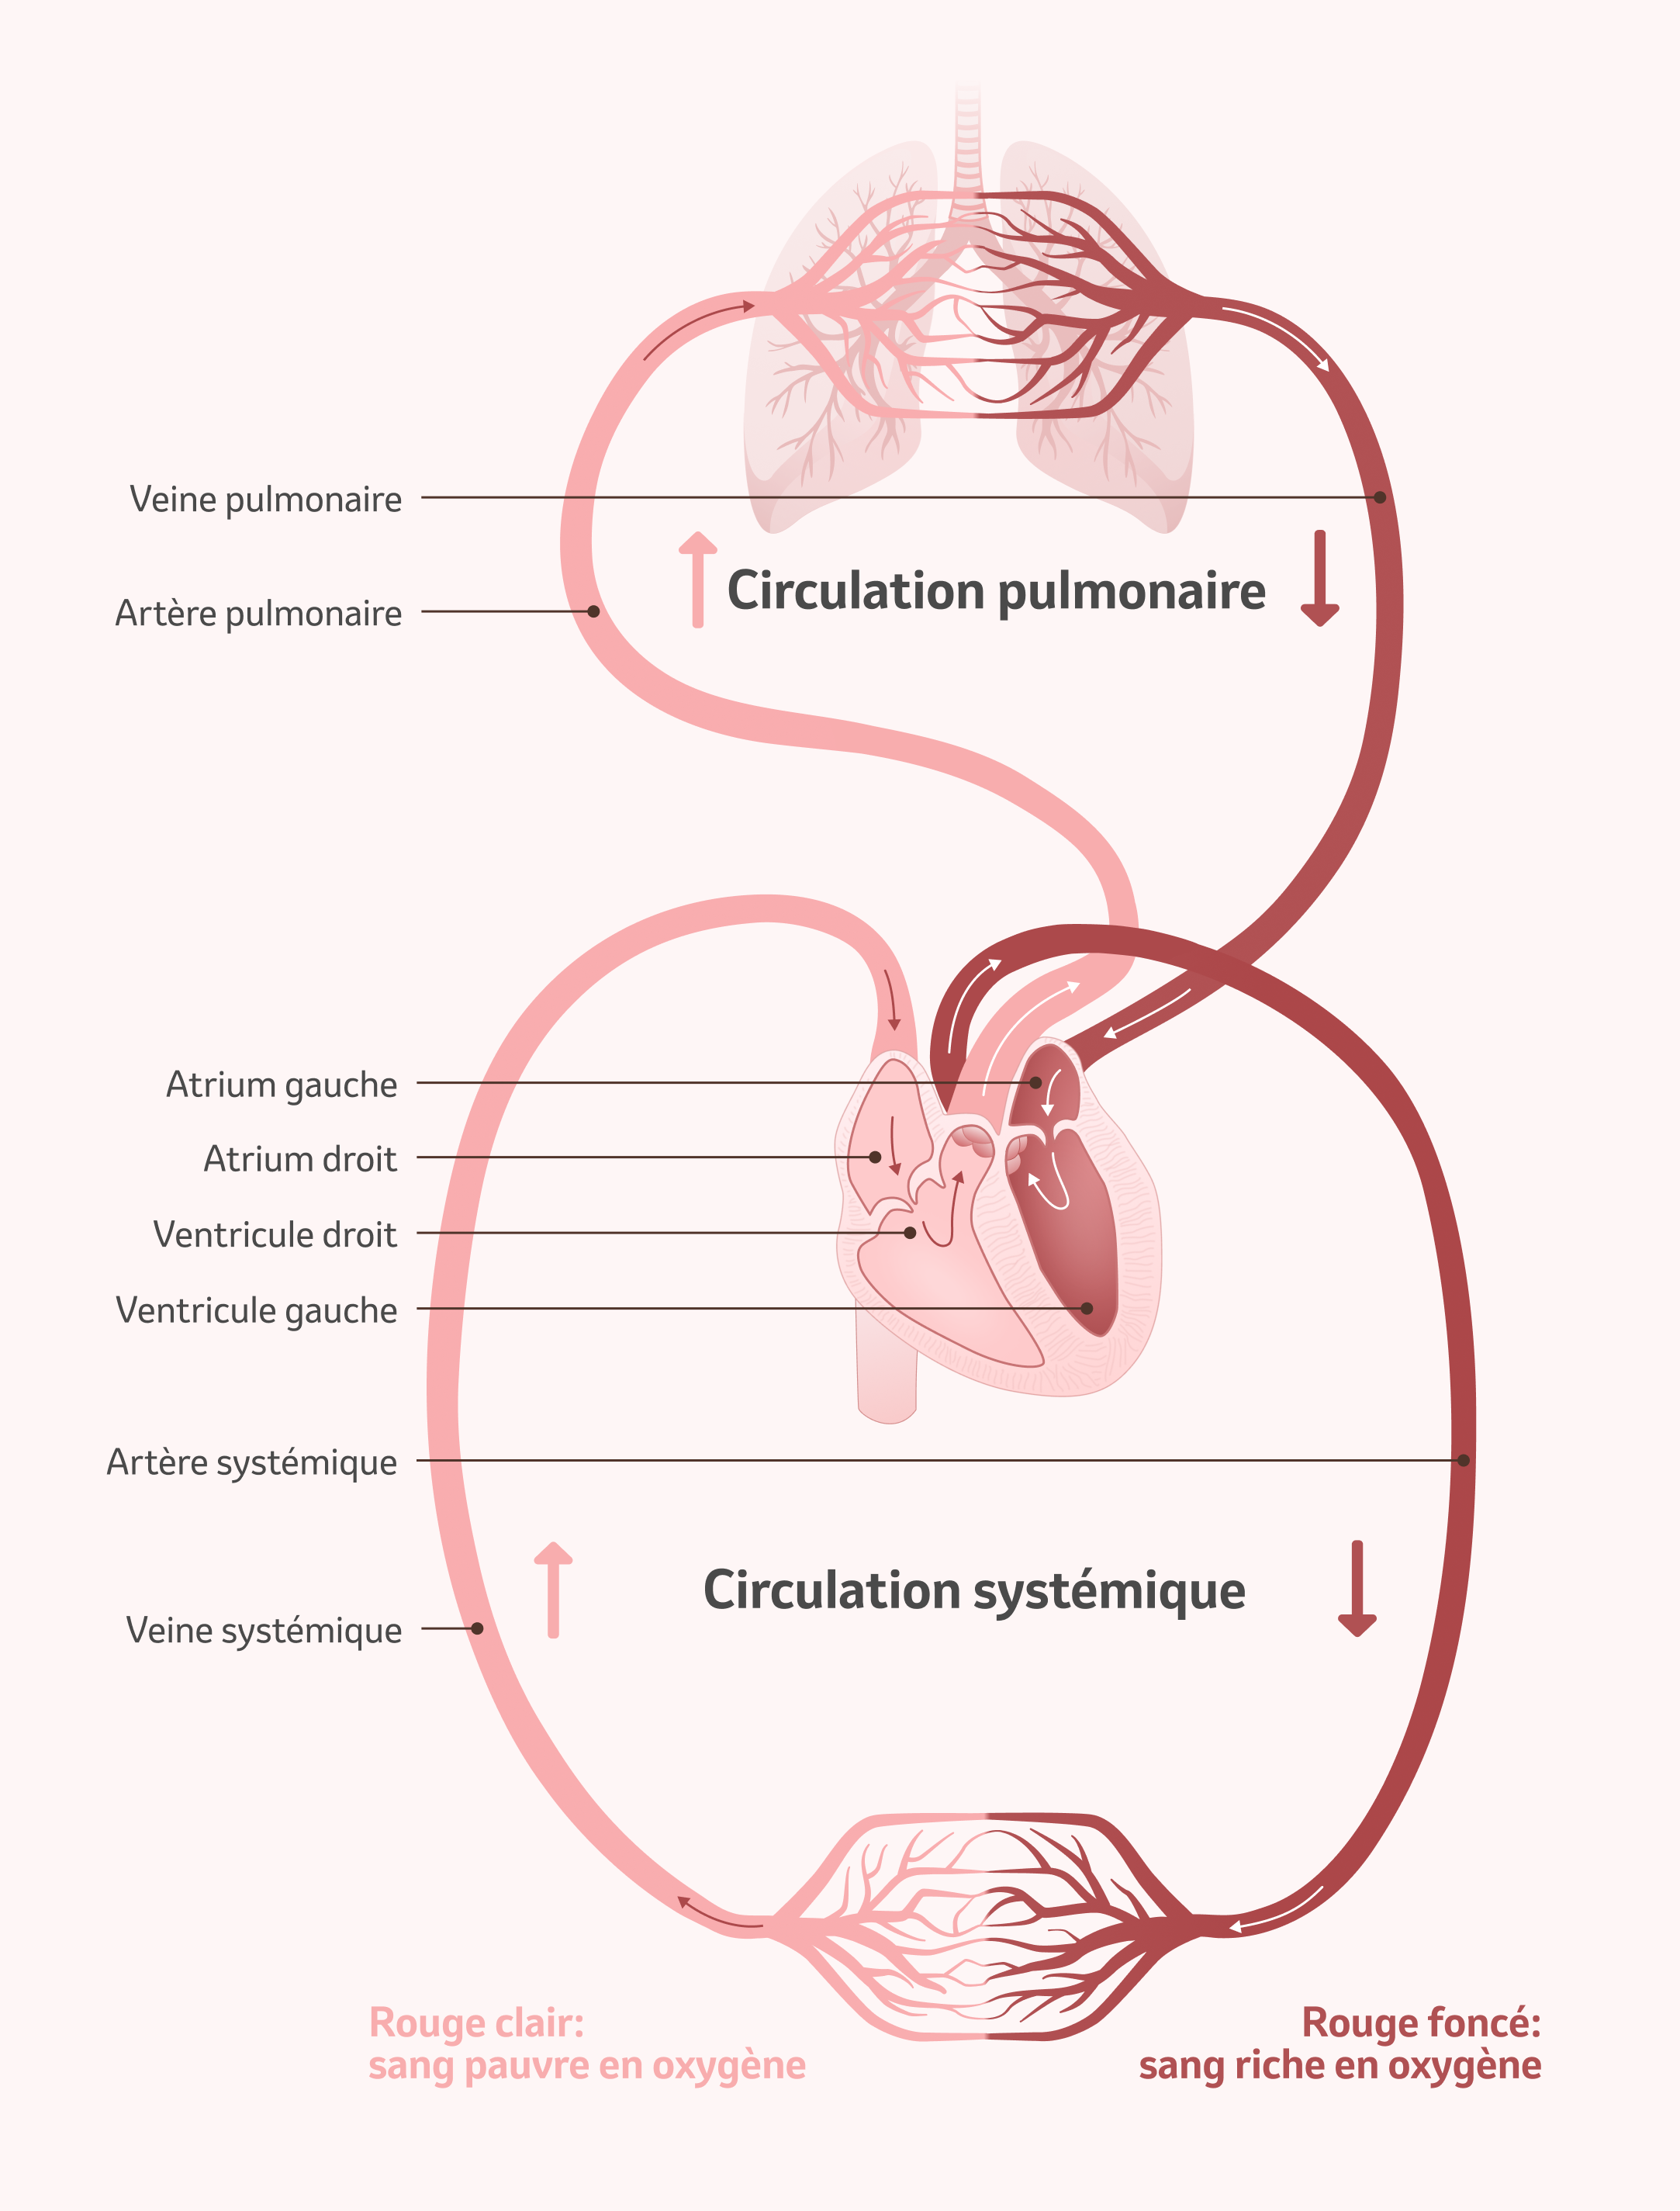 Image: le système circulatoire humain